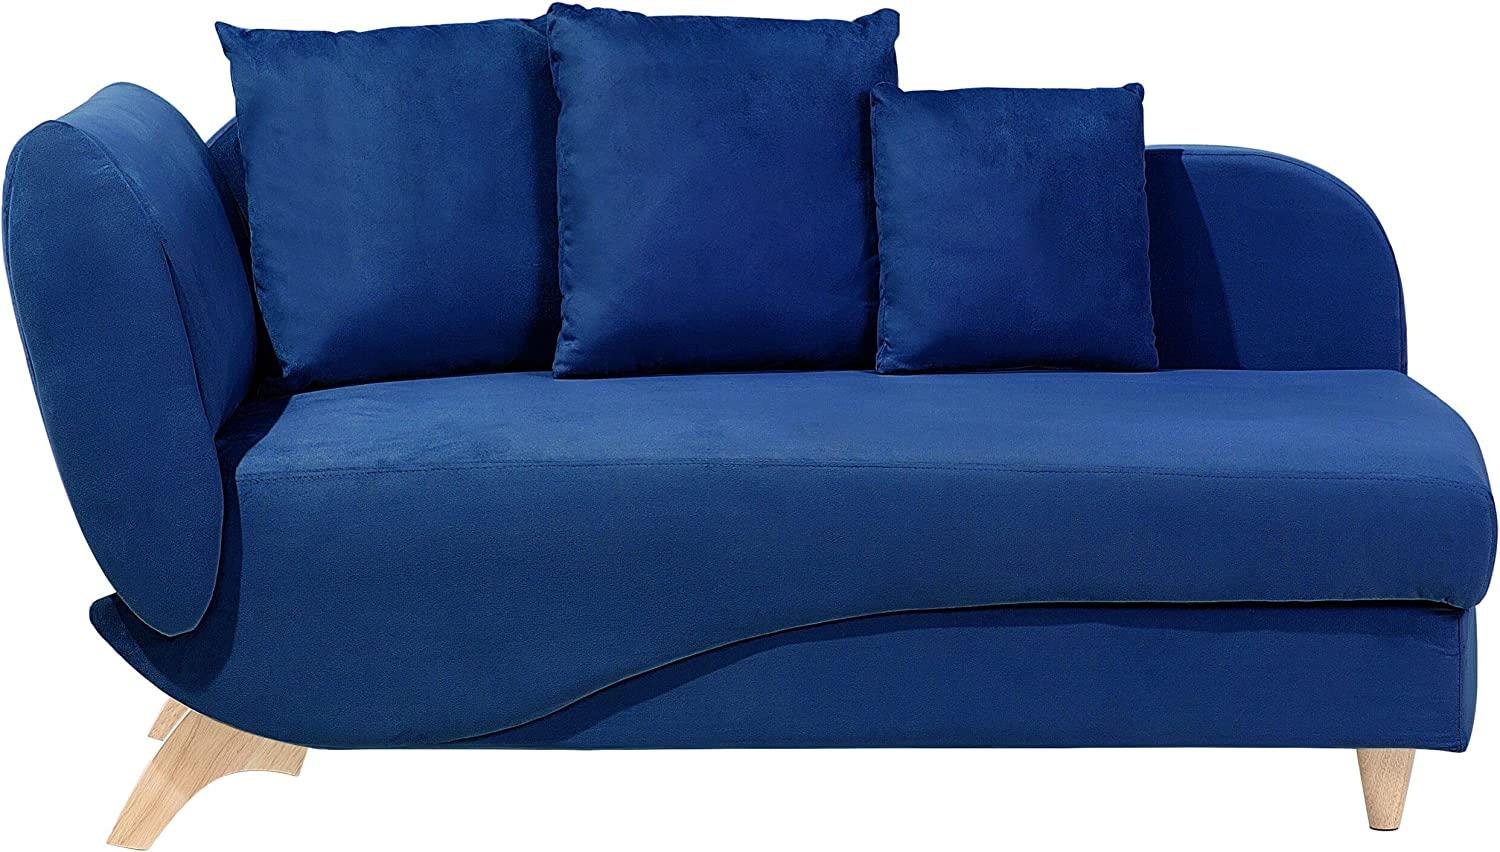 Chaiselongue Samtstoff dunkelblau mit Bettkasten MERI Bild 1